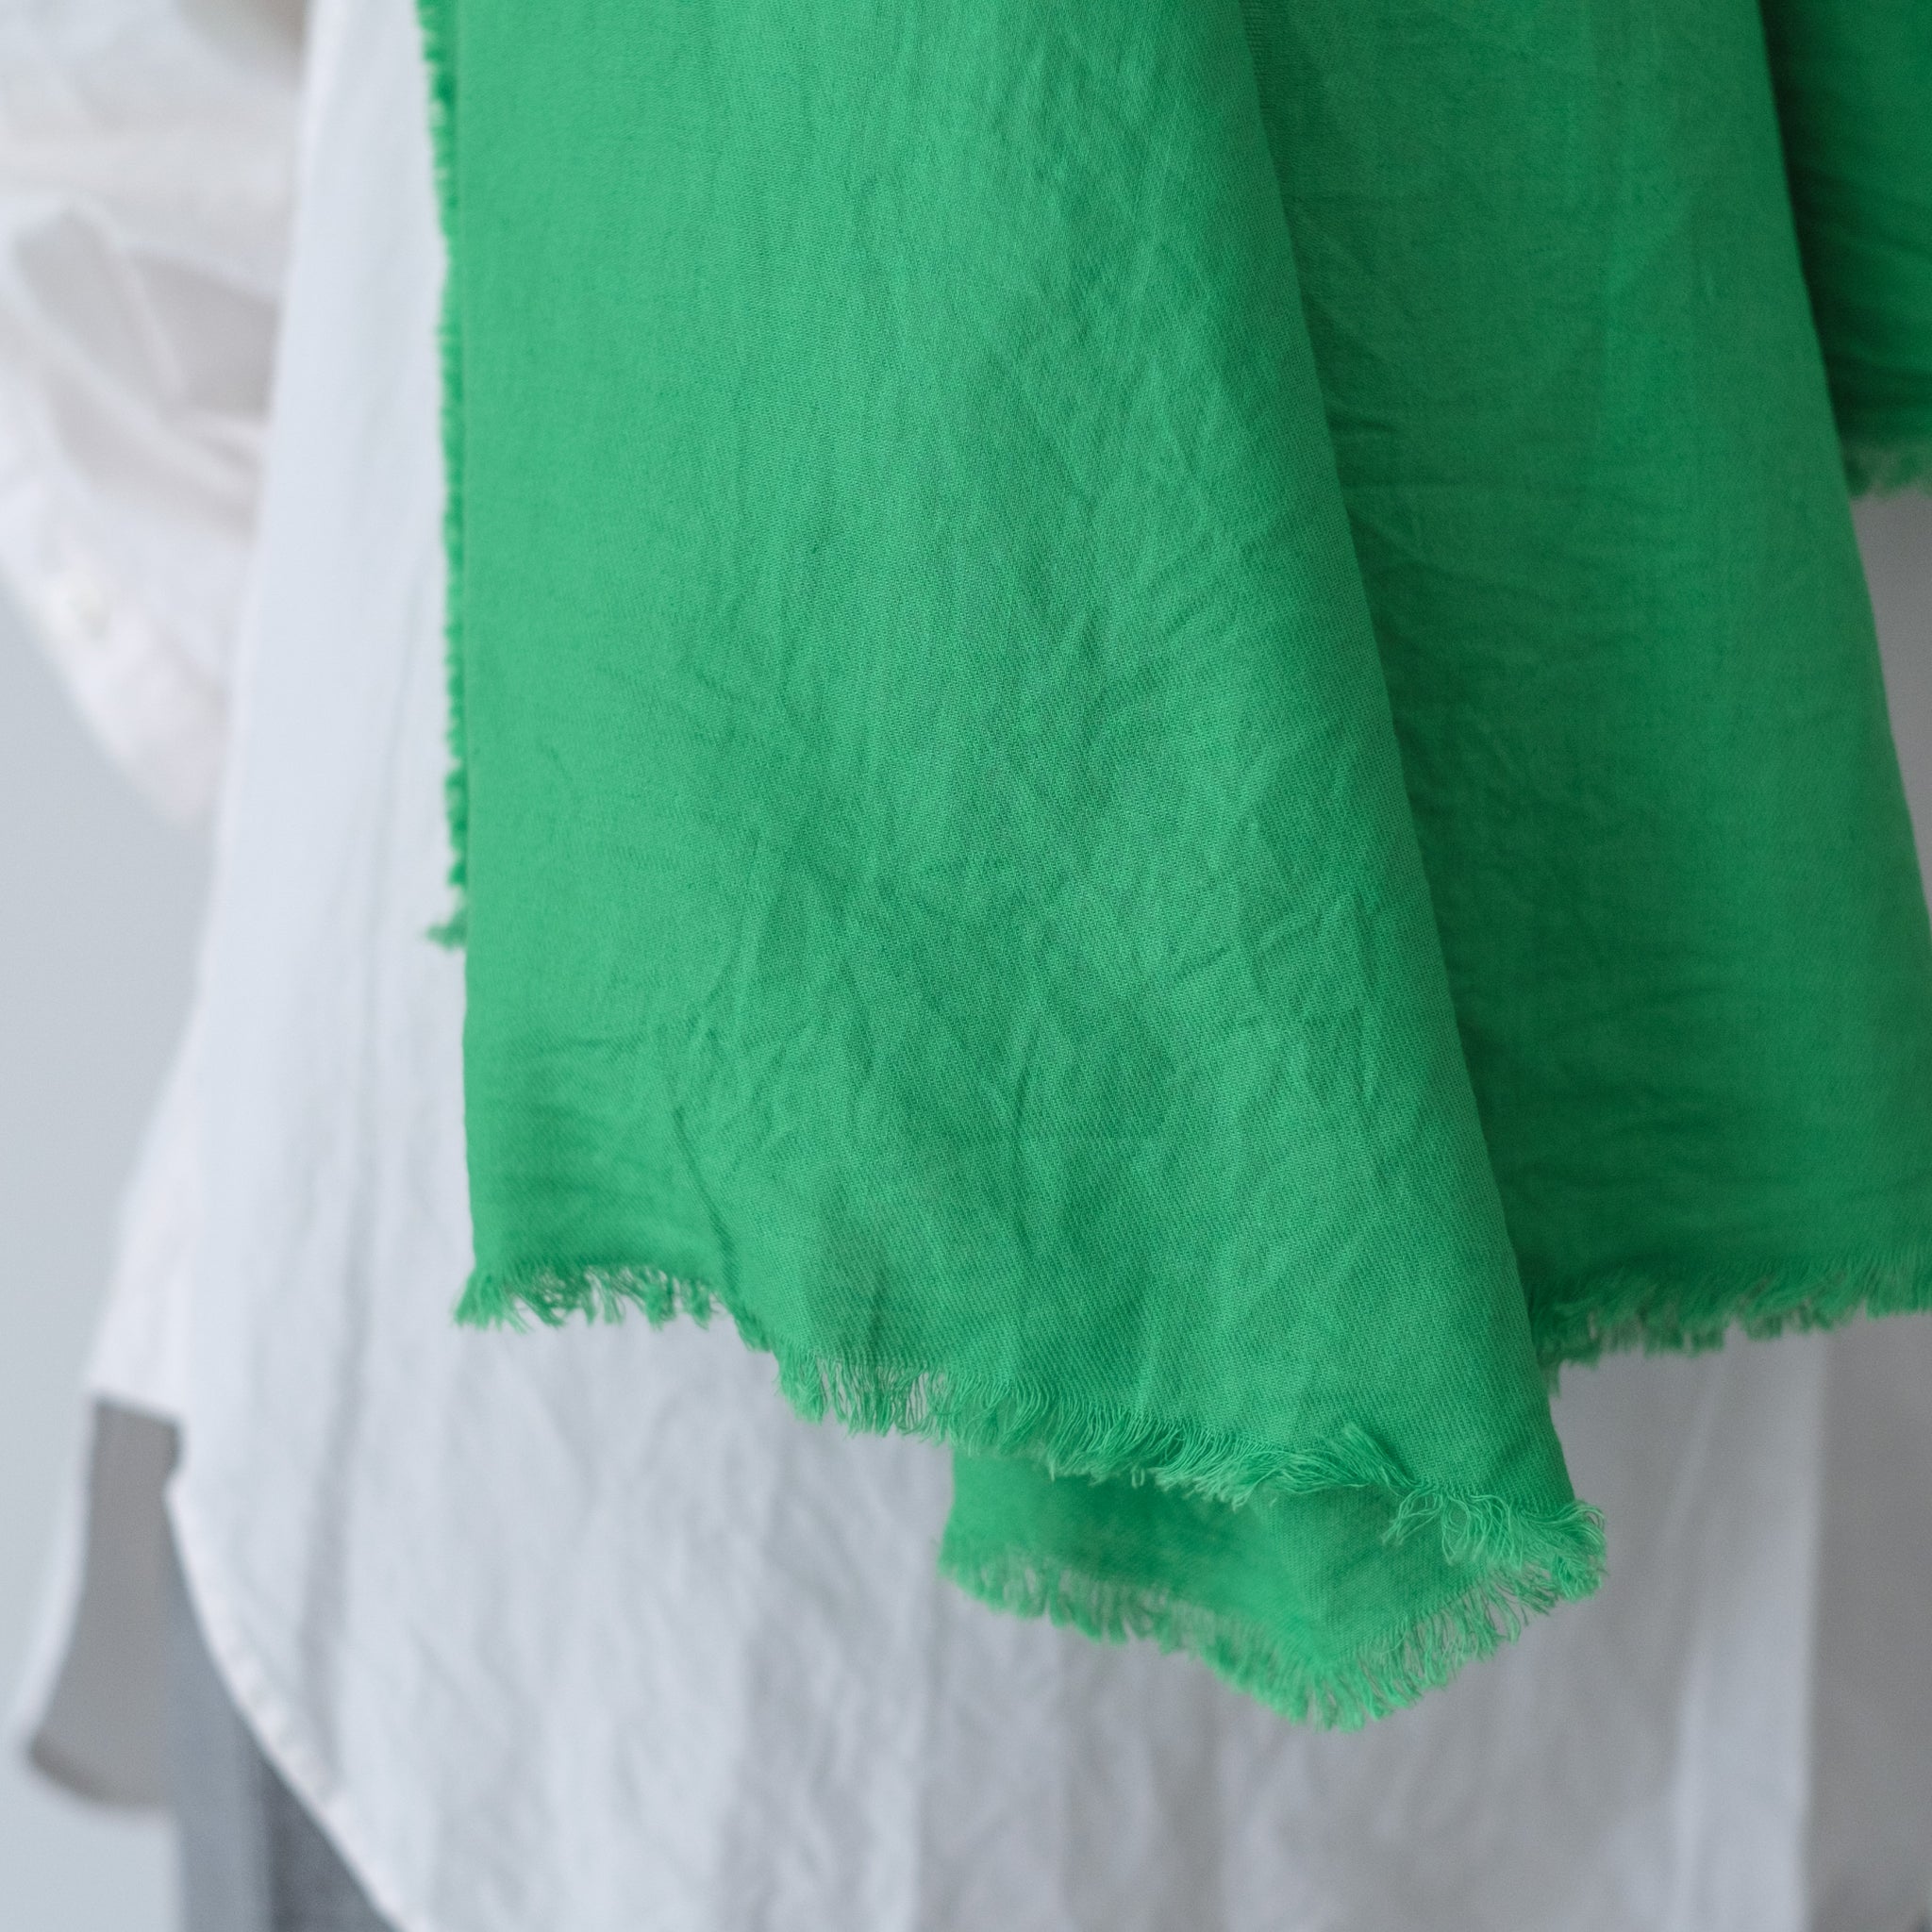 LOCALLY｜0191 cotton / linen viyella germent dye stole